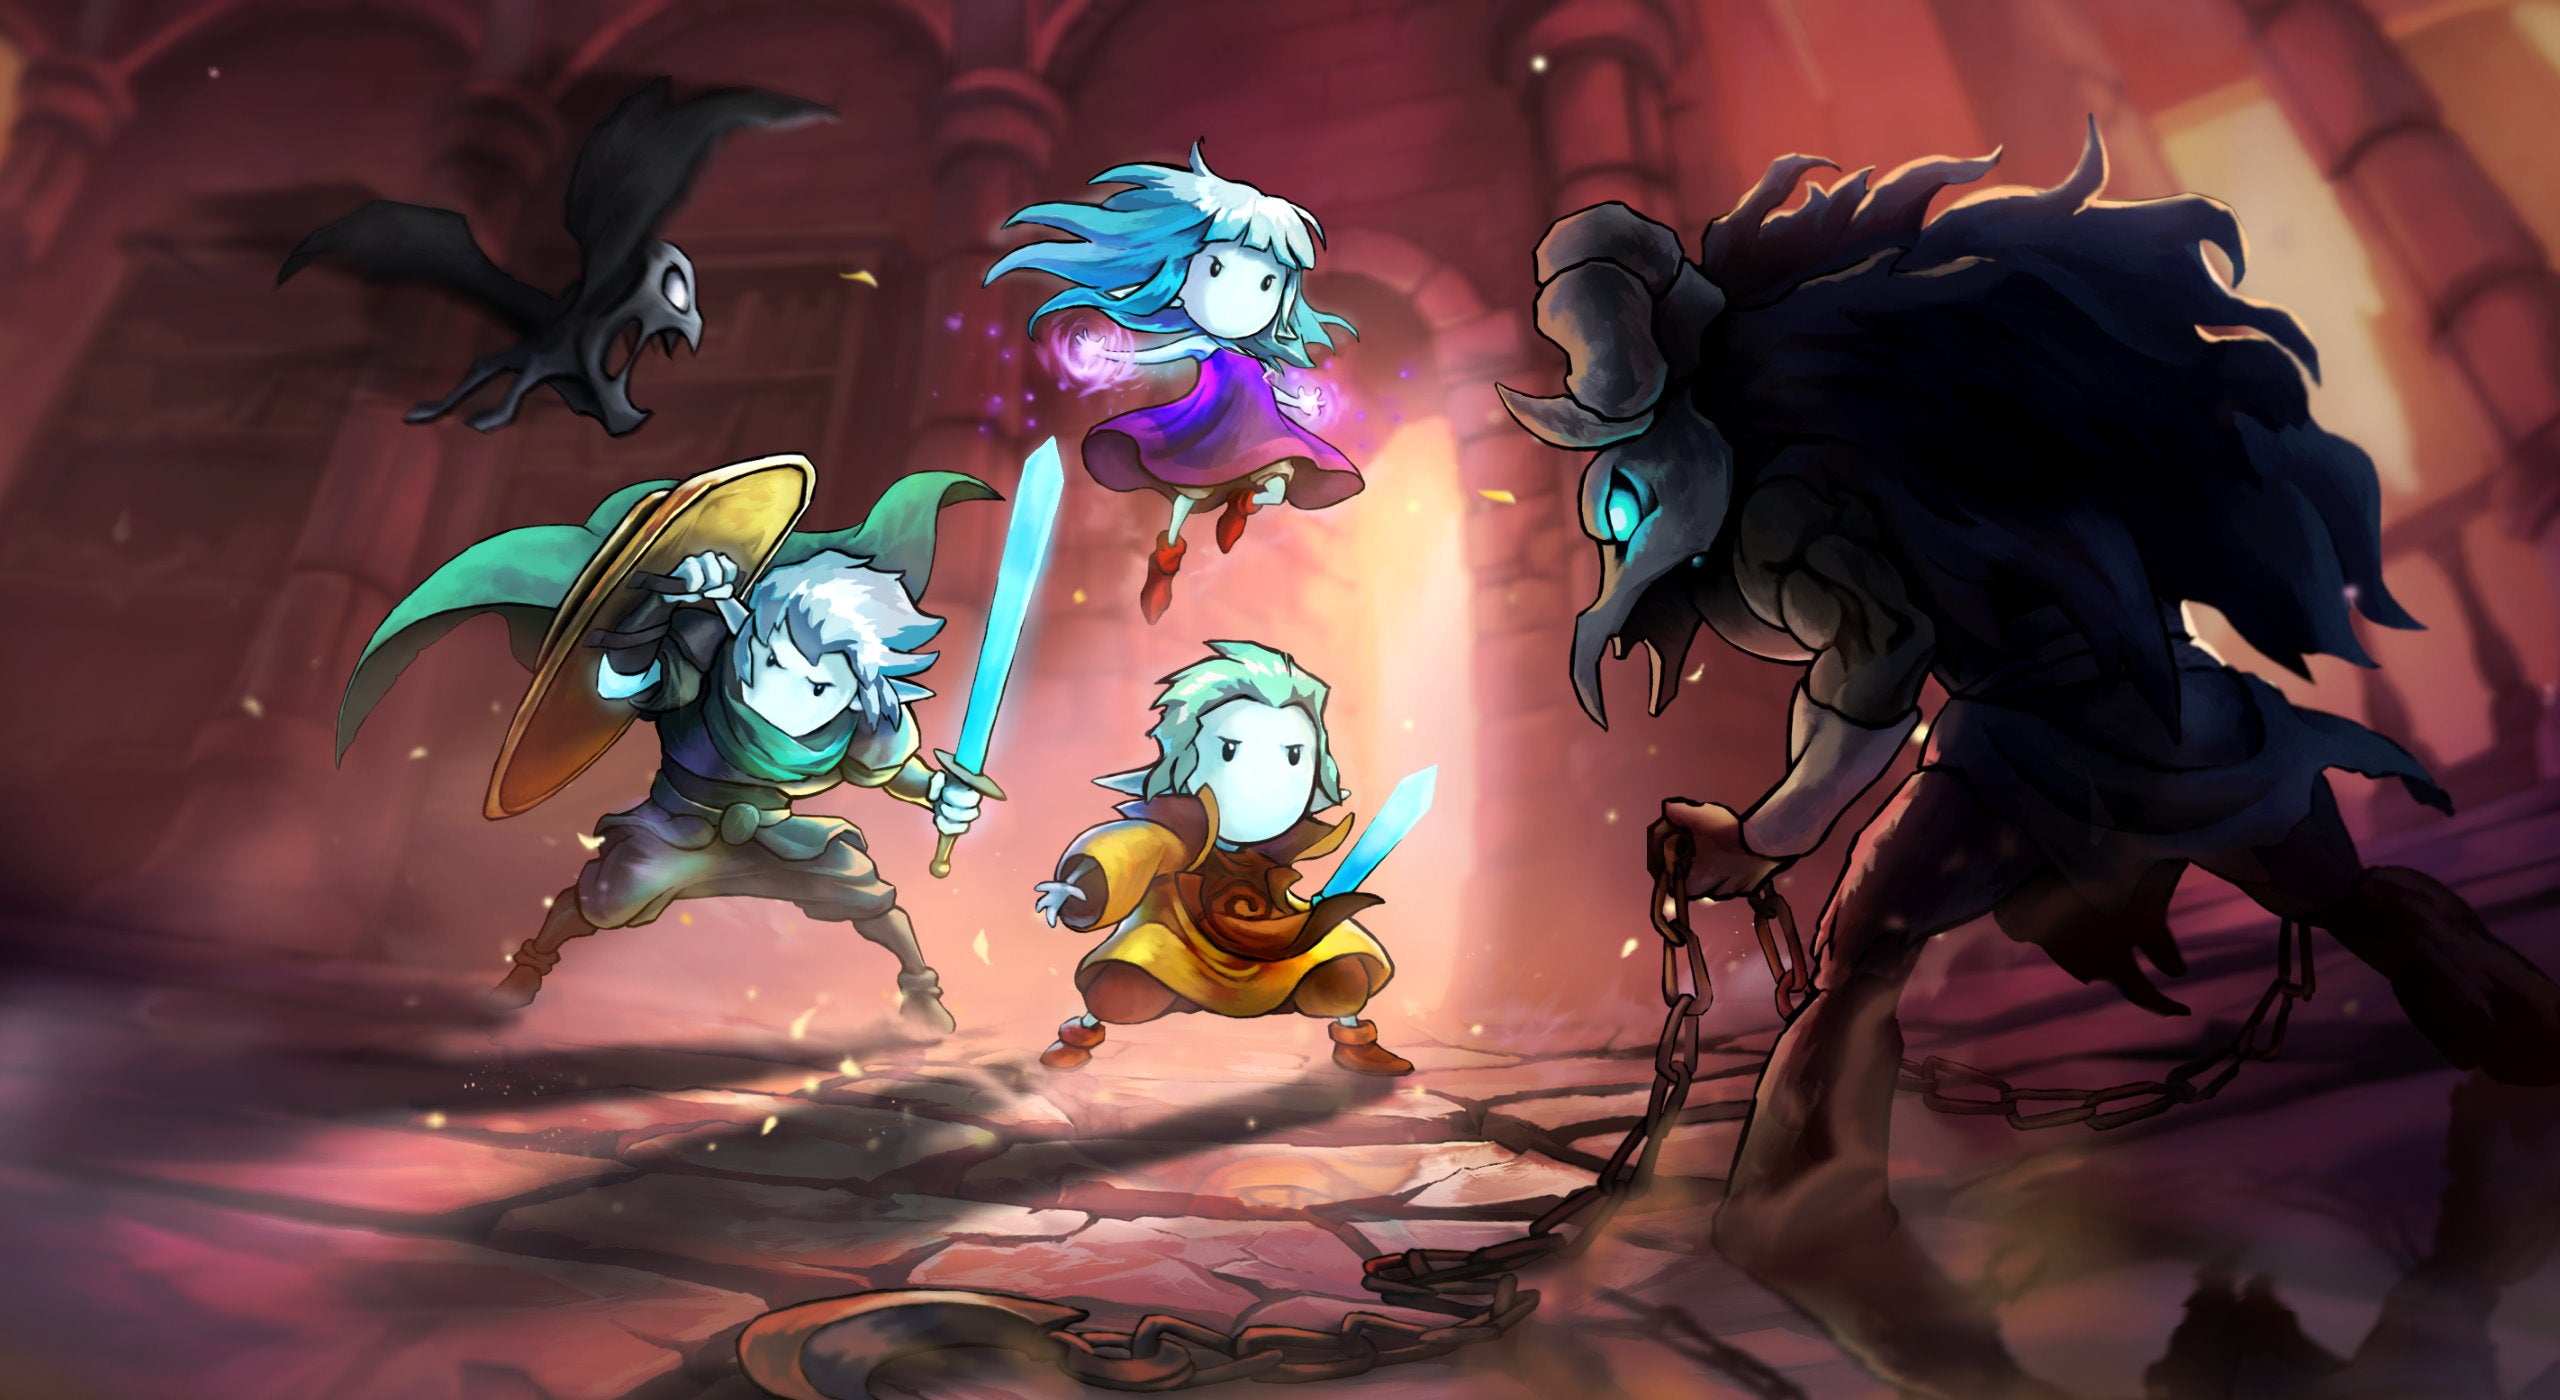 Artwork showing the three siblings of Greak: Memories Of Azur fighting two demons in a backlit dungeon setting